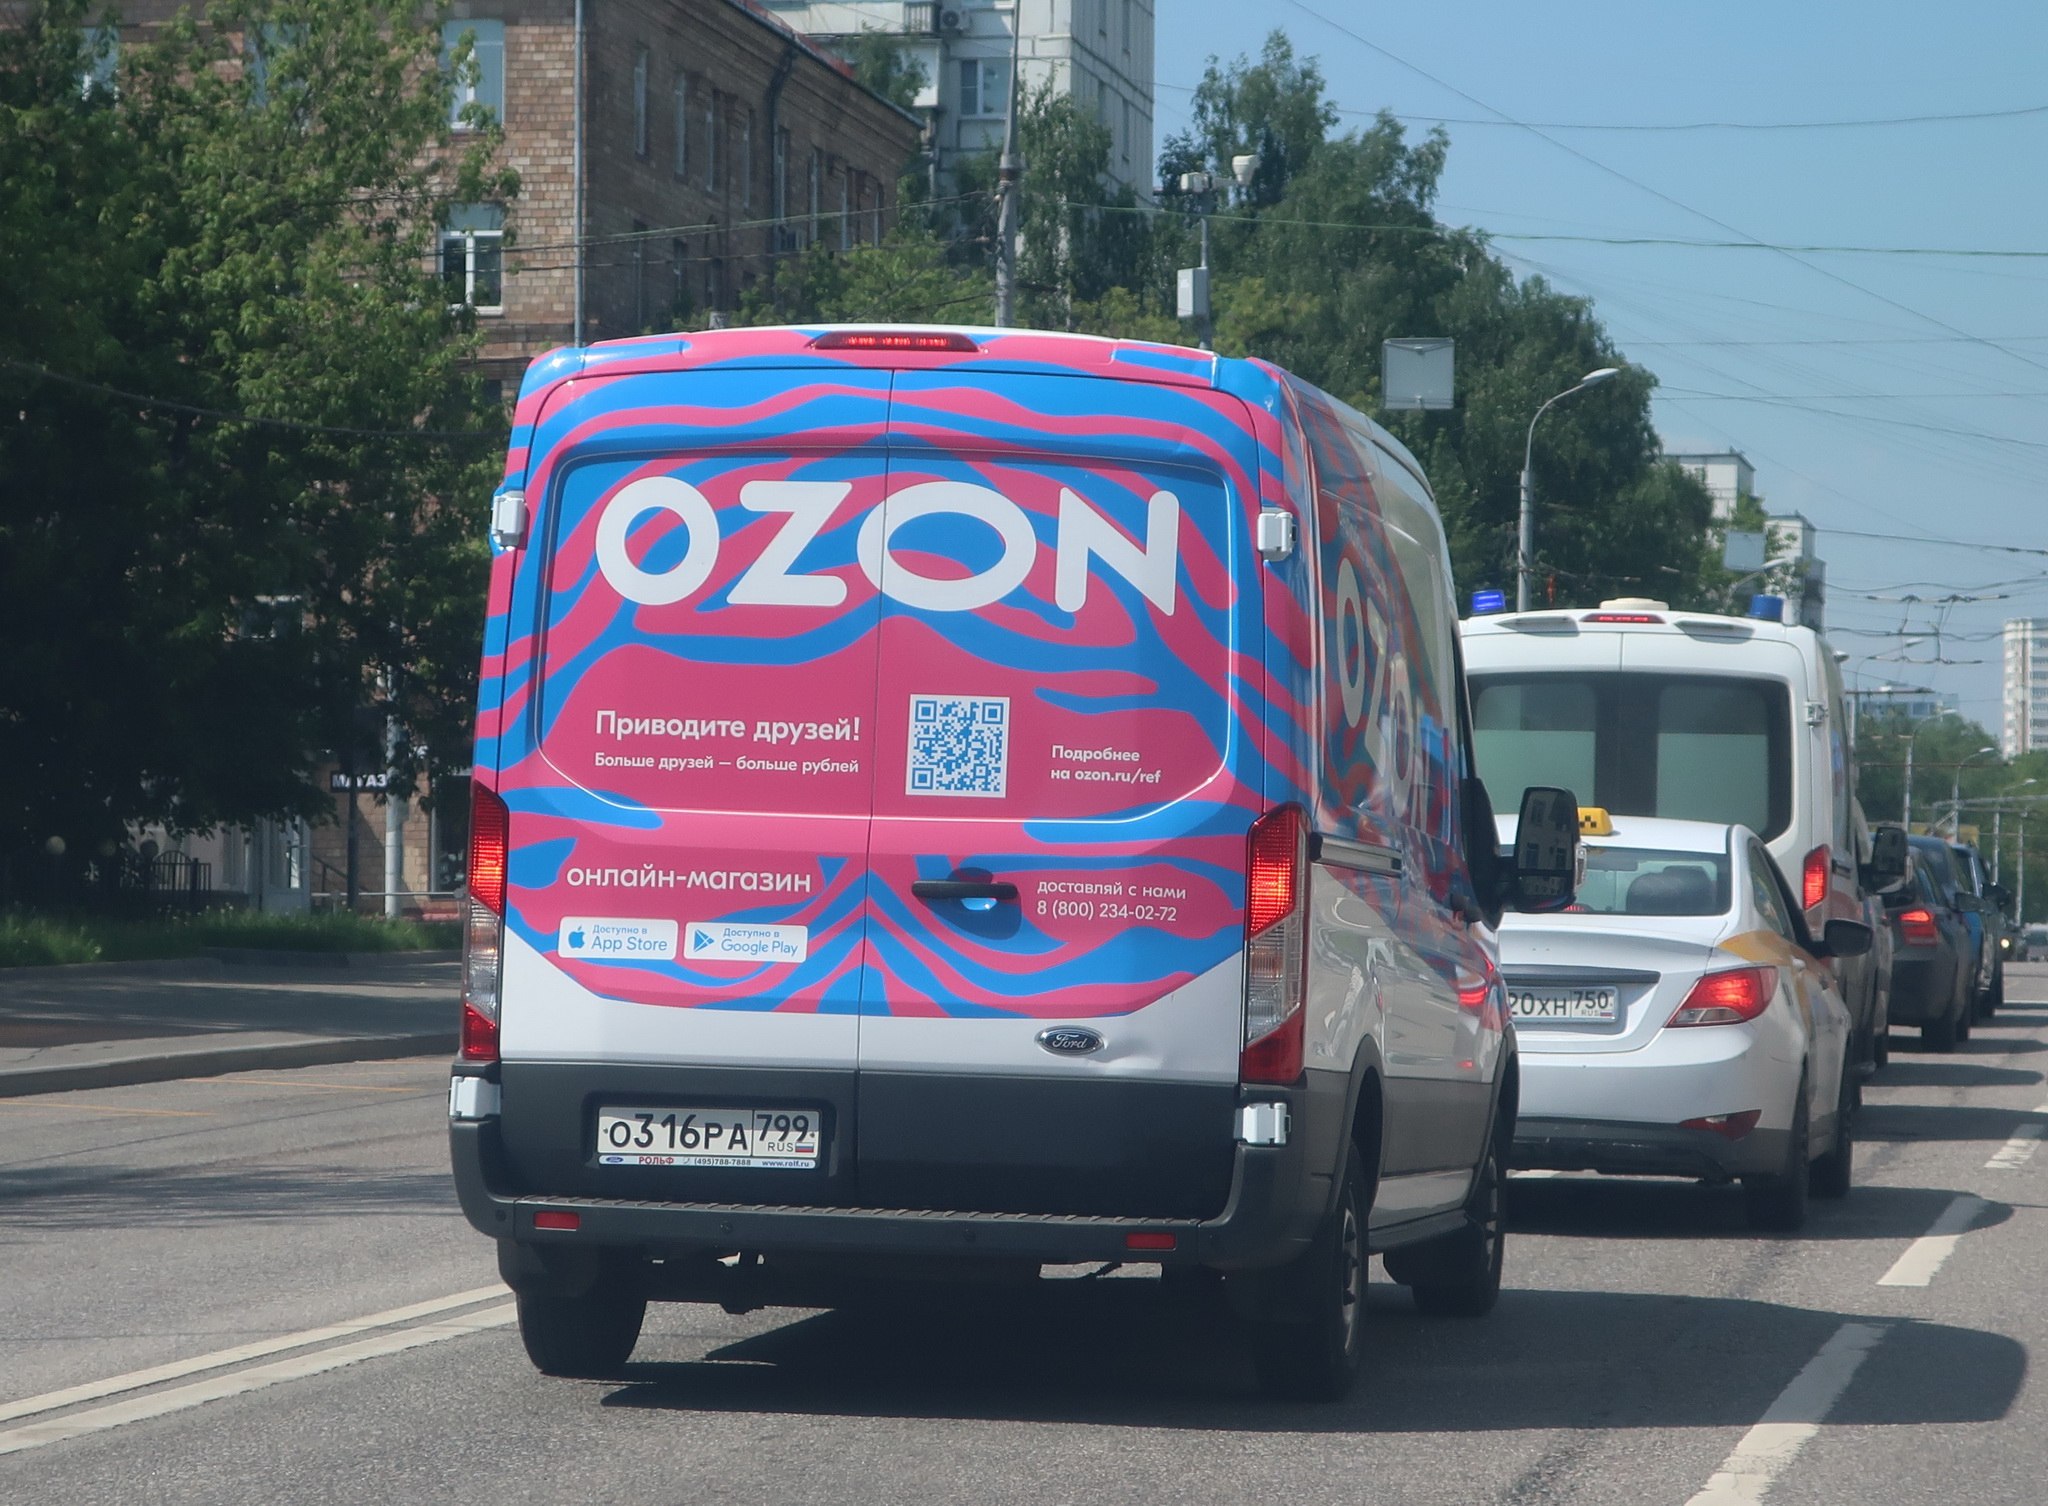 Озон автомобили отзывы. Ford Transit OZON. Форд Транзит Озон. Брендирование авто OZON. Брендированные машины Озон.